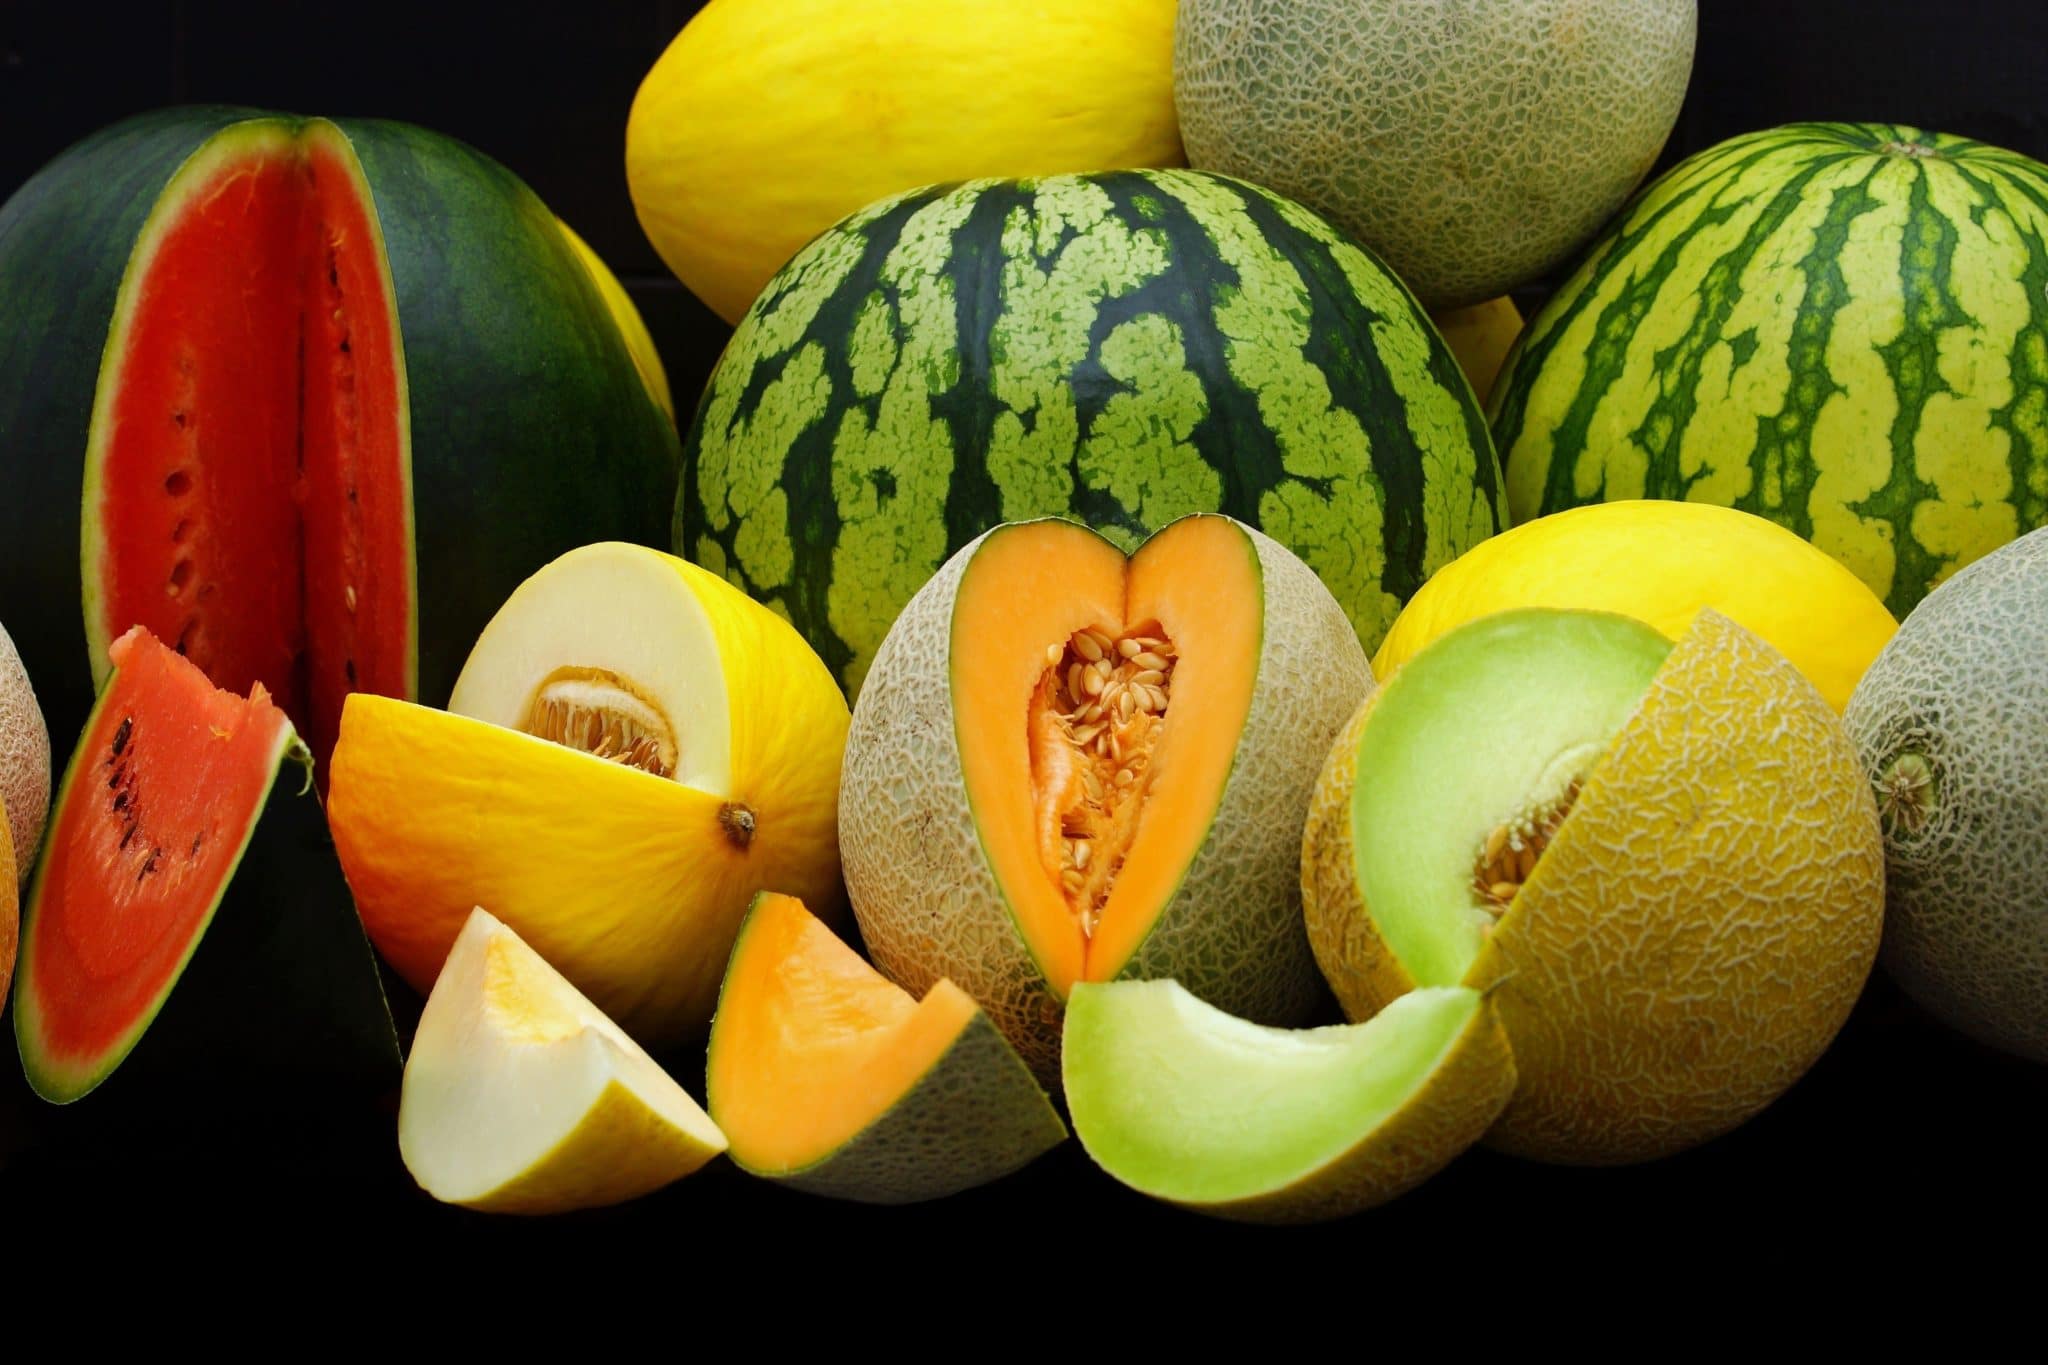 Rocky Ford Melons - Watermelon, Cantaloupe, Honeydew